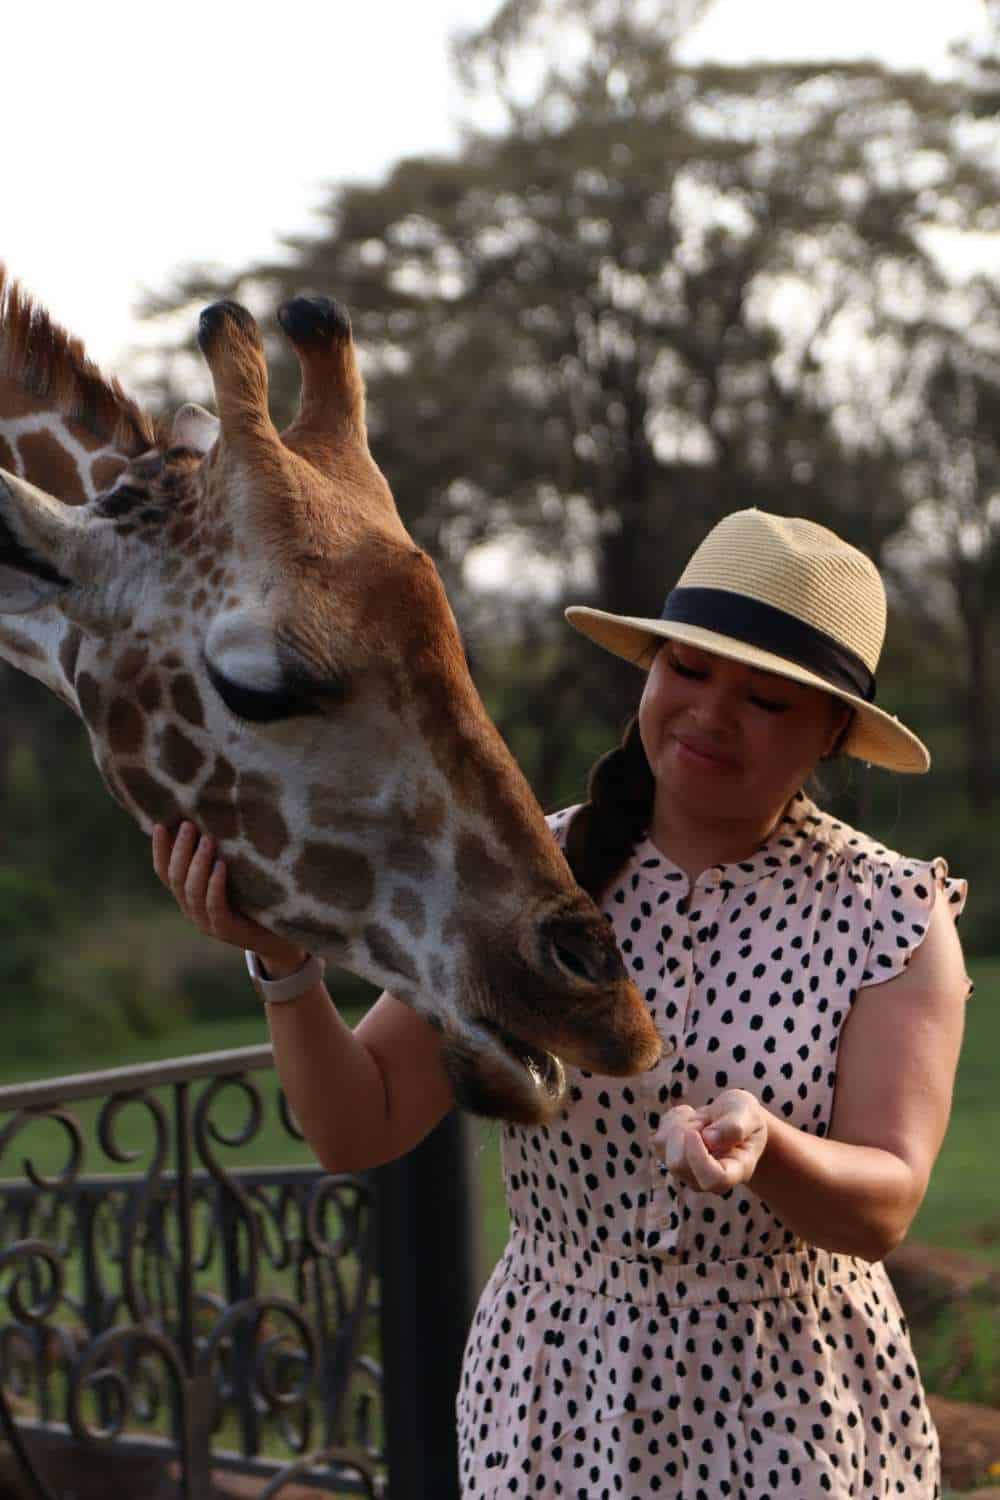 Sophie feeding rothschild giraffe at Giraffe Manor in Nairobi, Kenya